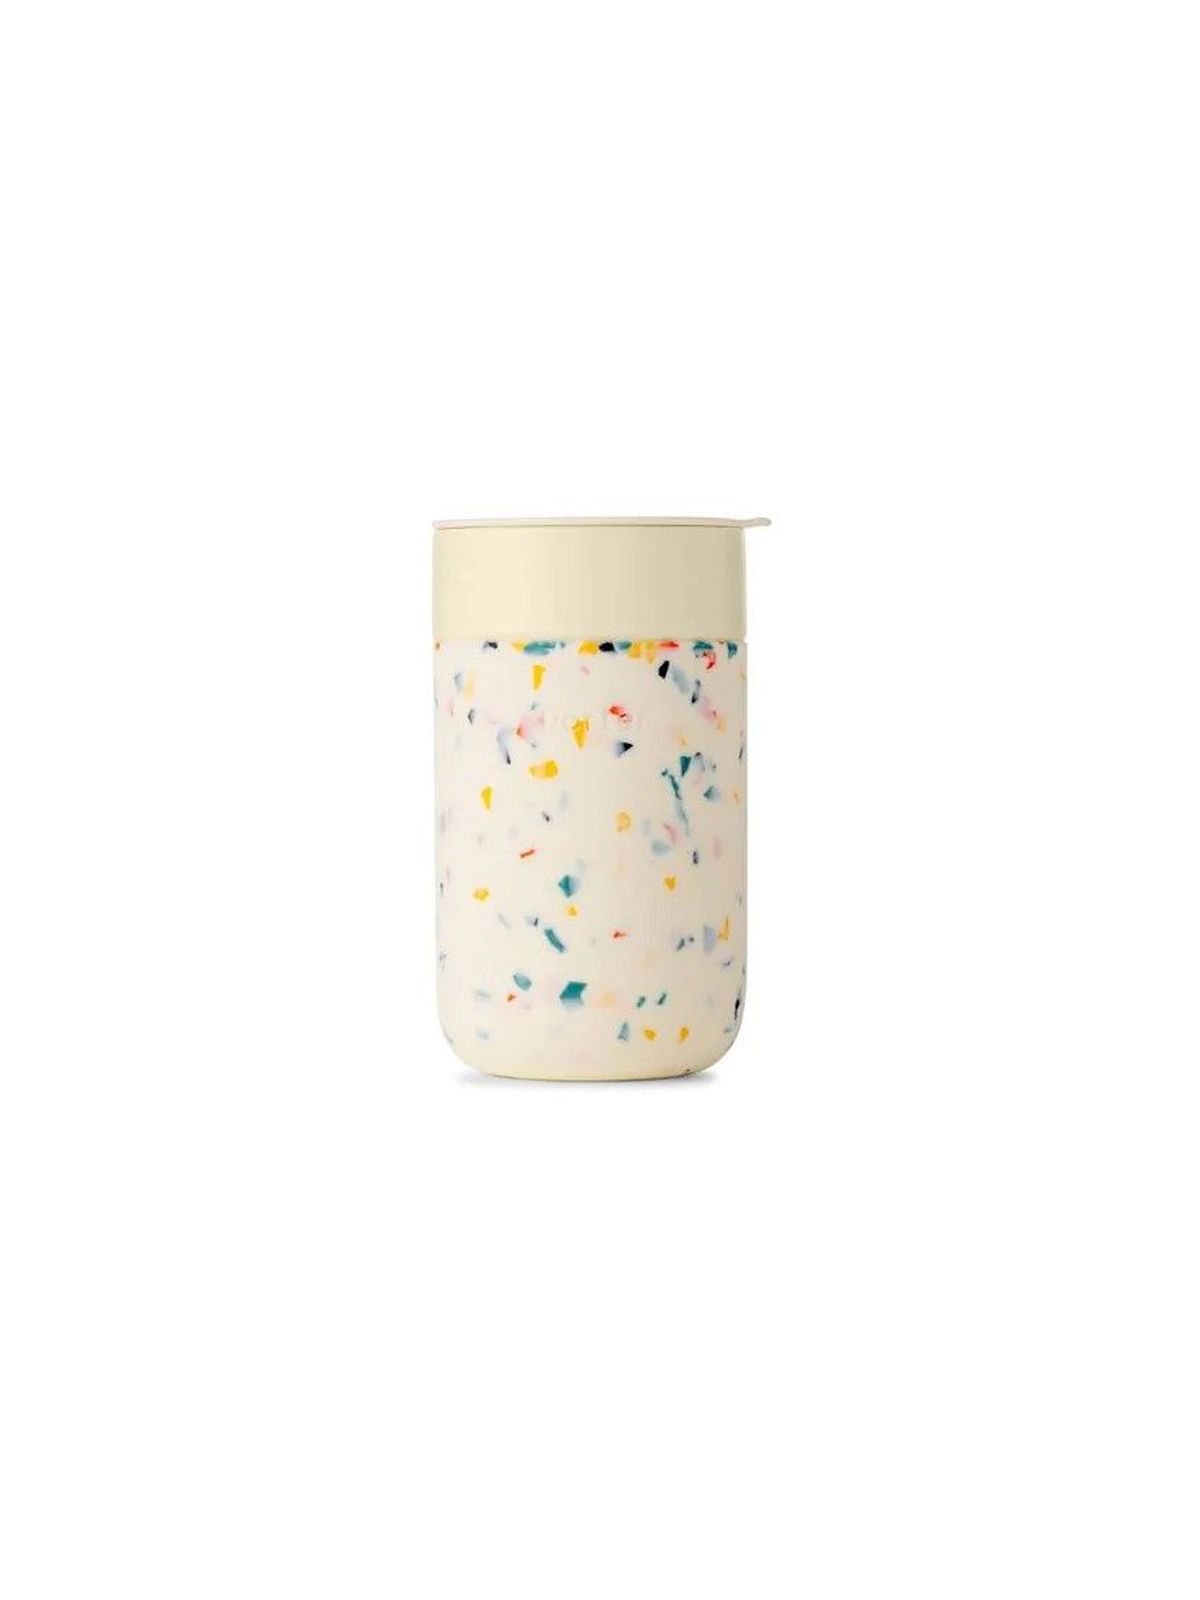 A cream mug with a terrazzo print